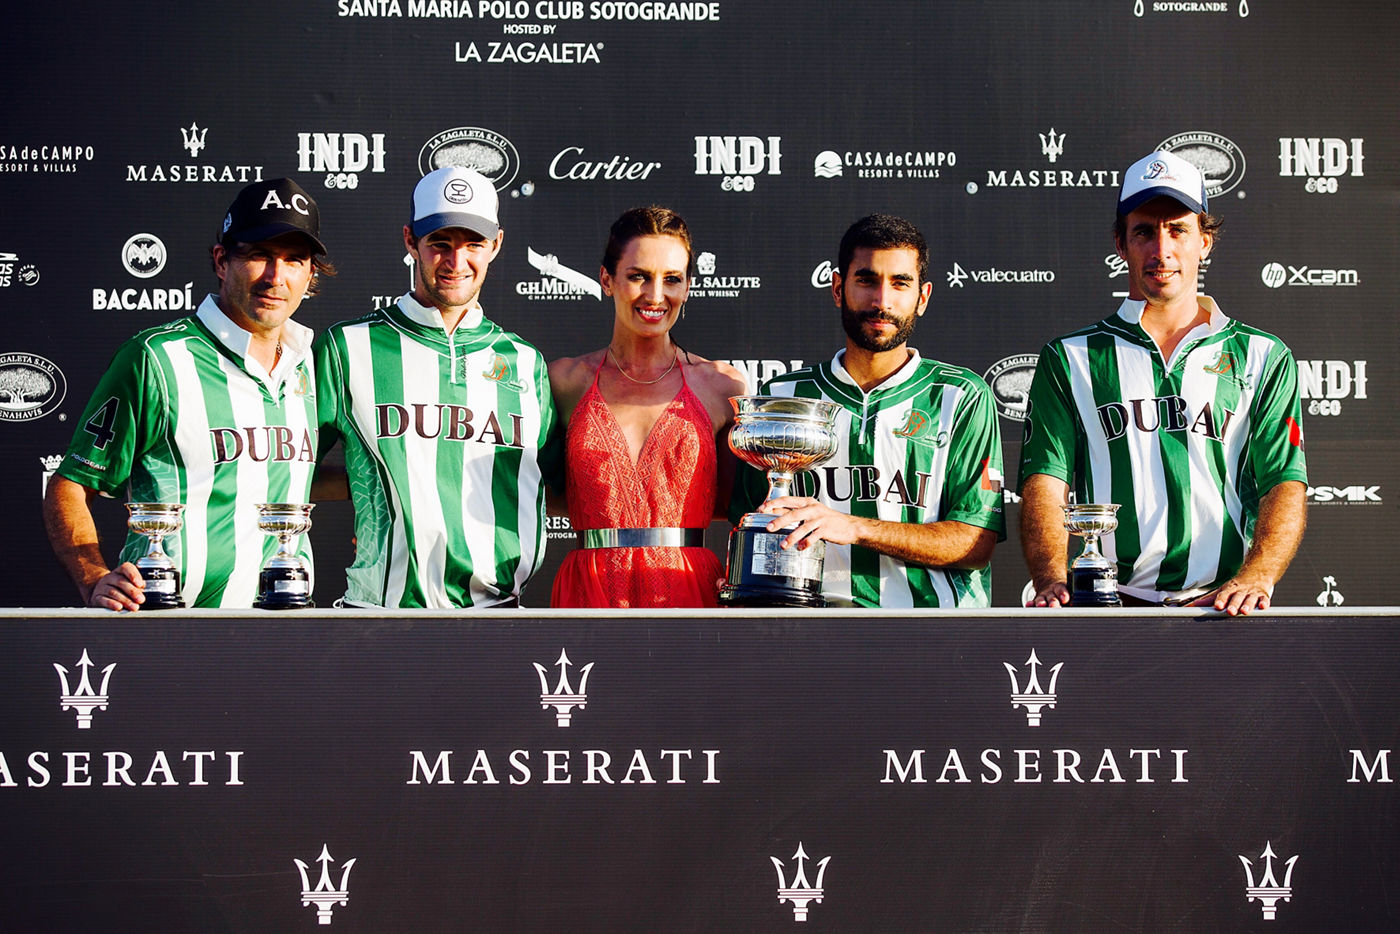 45' Torneo Internacional de Polo Sotogrande (14) - Maserati Bronze Cup Final - Nieves Alvarez with Dubai Team